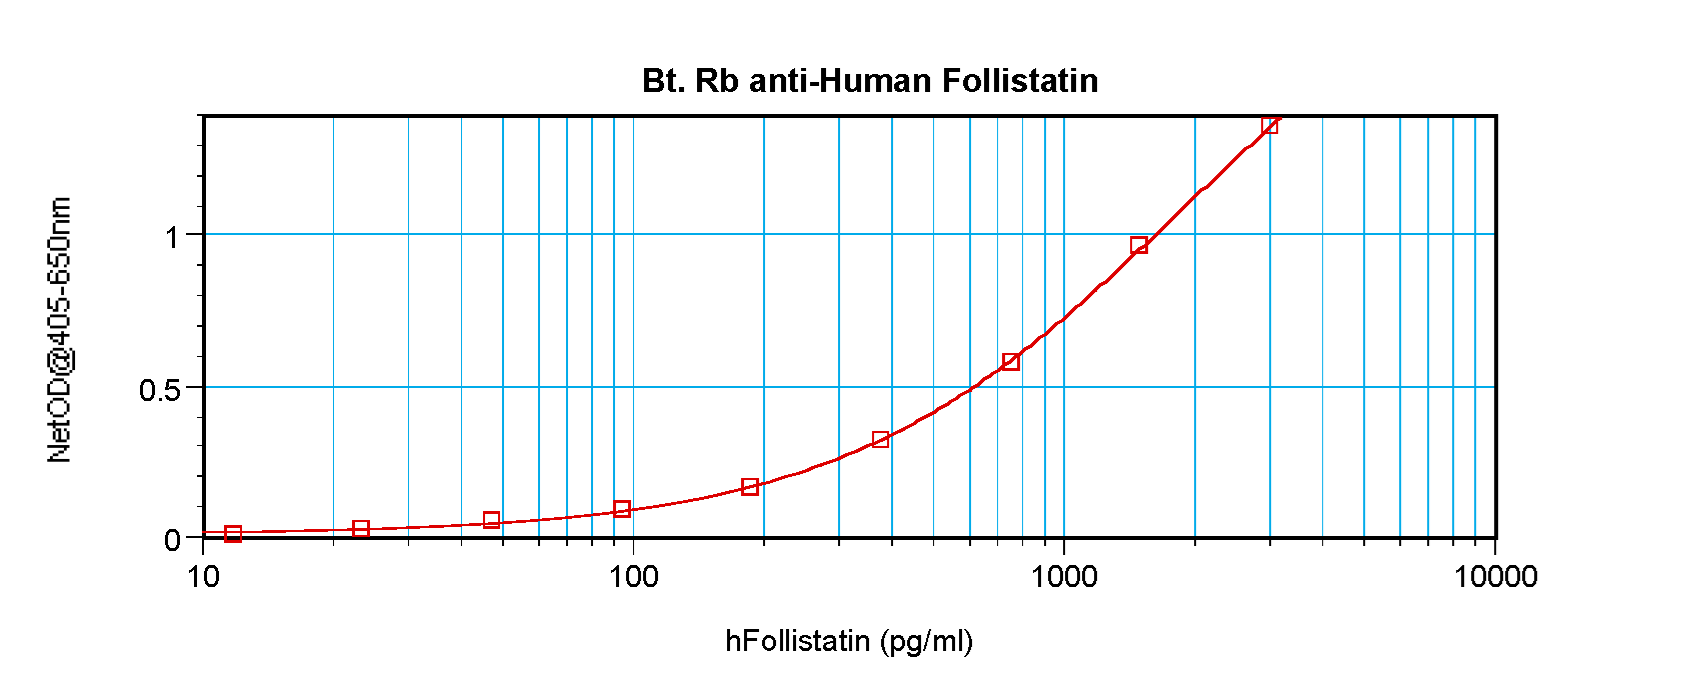 FST / Follistatin Antibody - Biotinylated Anti-Human Follistatin Sandwich ELISA